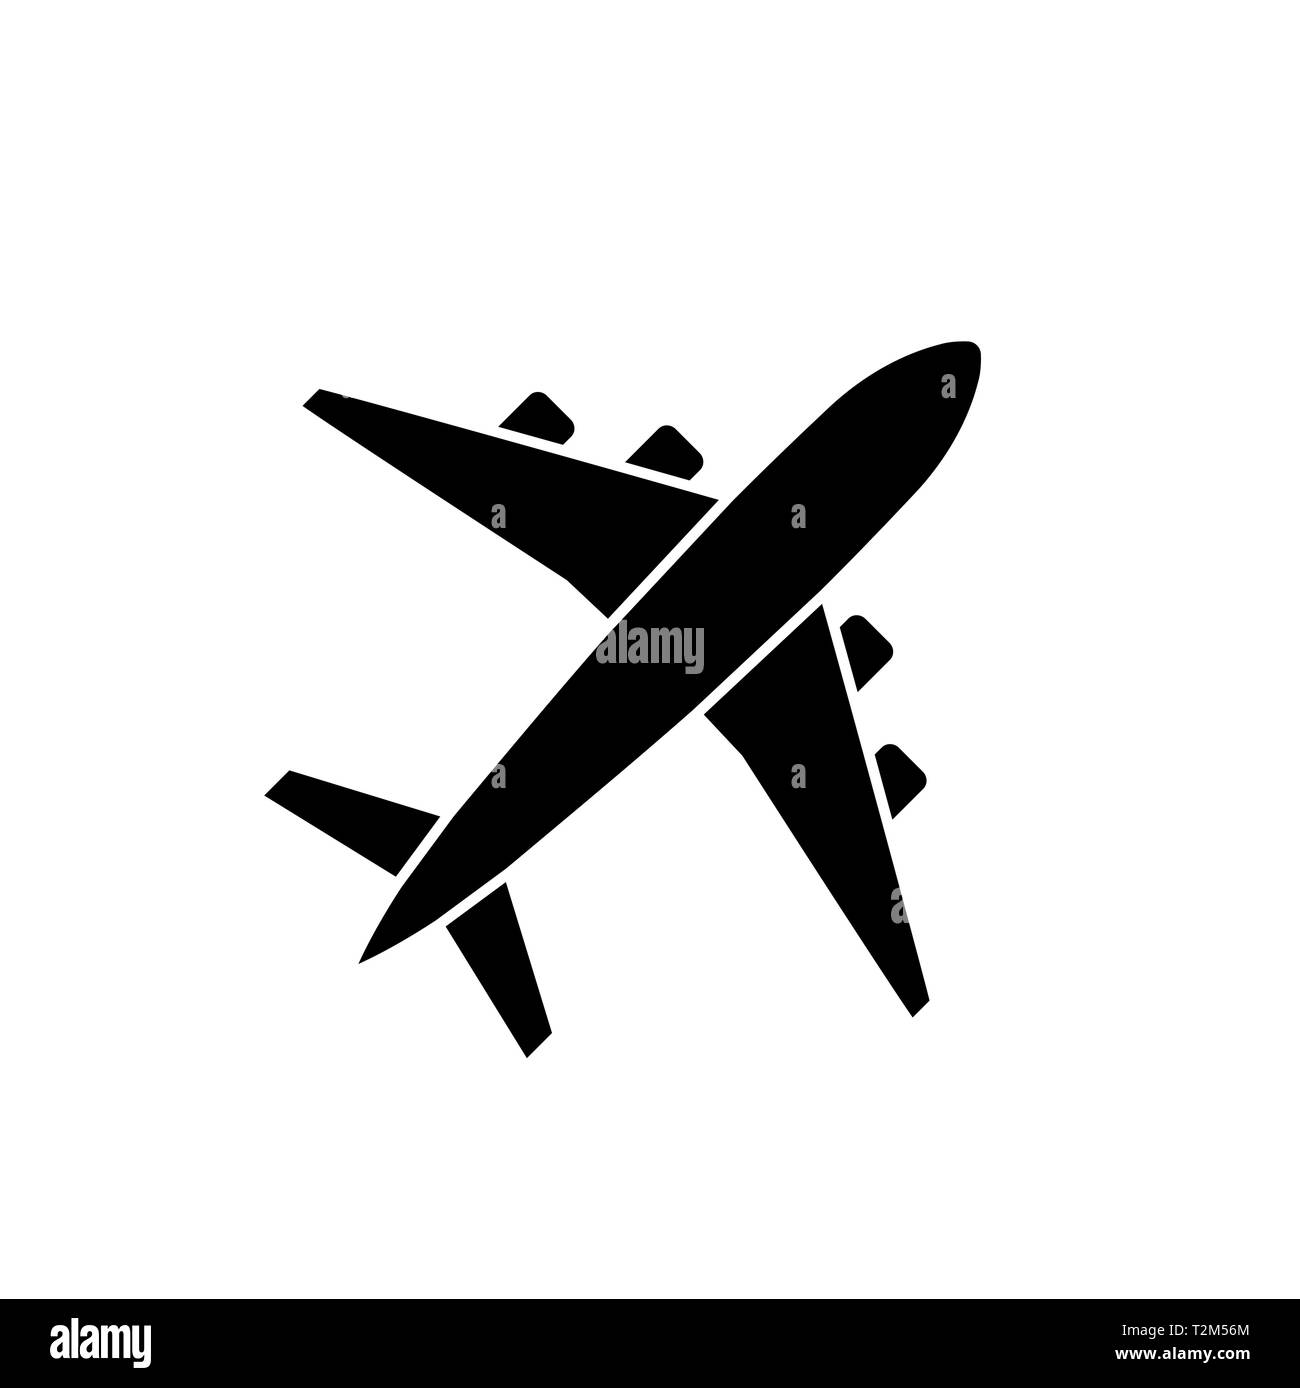 Plane Icon Black and White Stock Photos & Images   Alamy